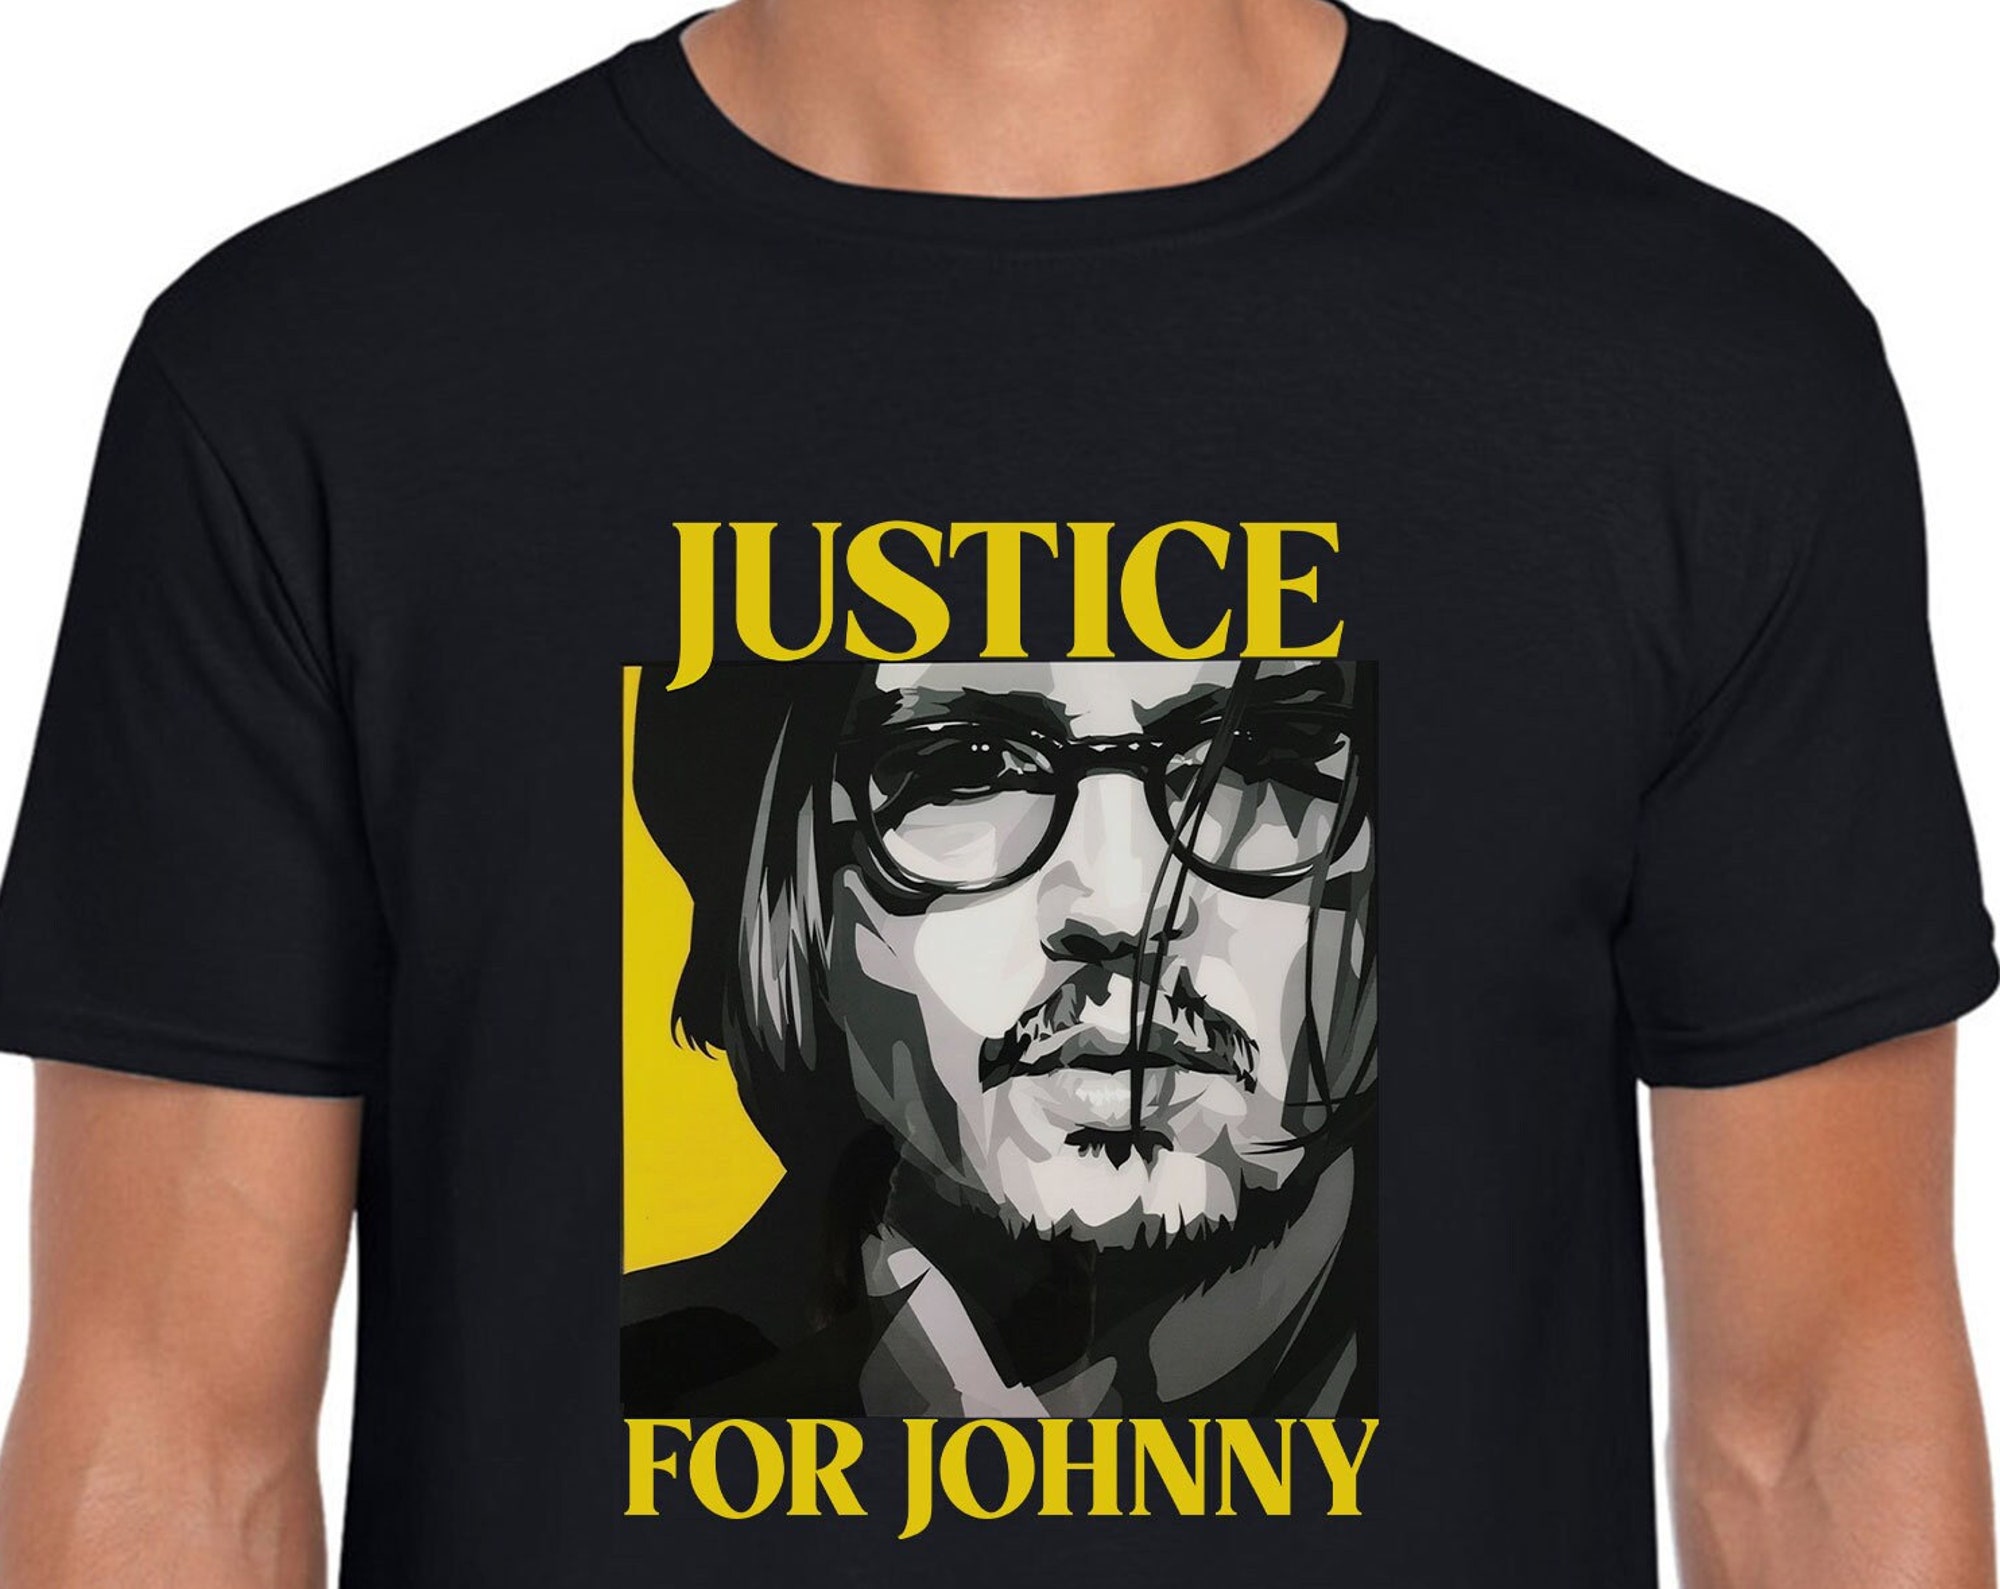 Discover Justice For Johnny Tshirt, Johnny Depp Tshirt